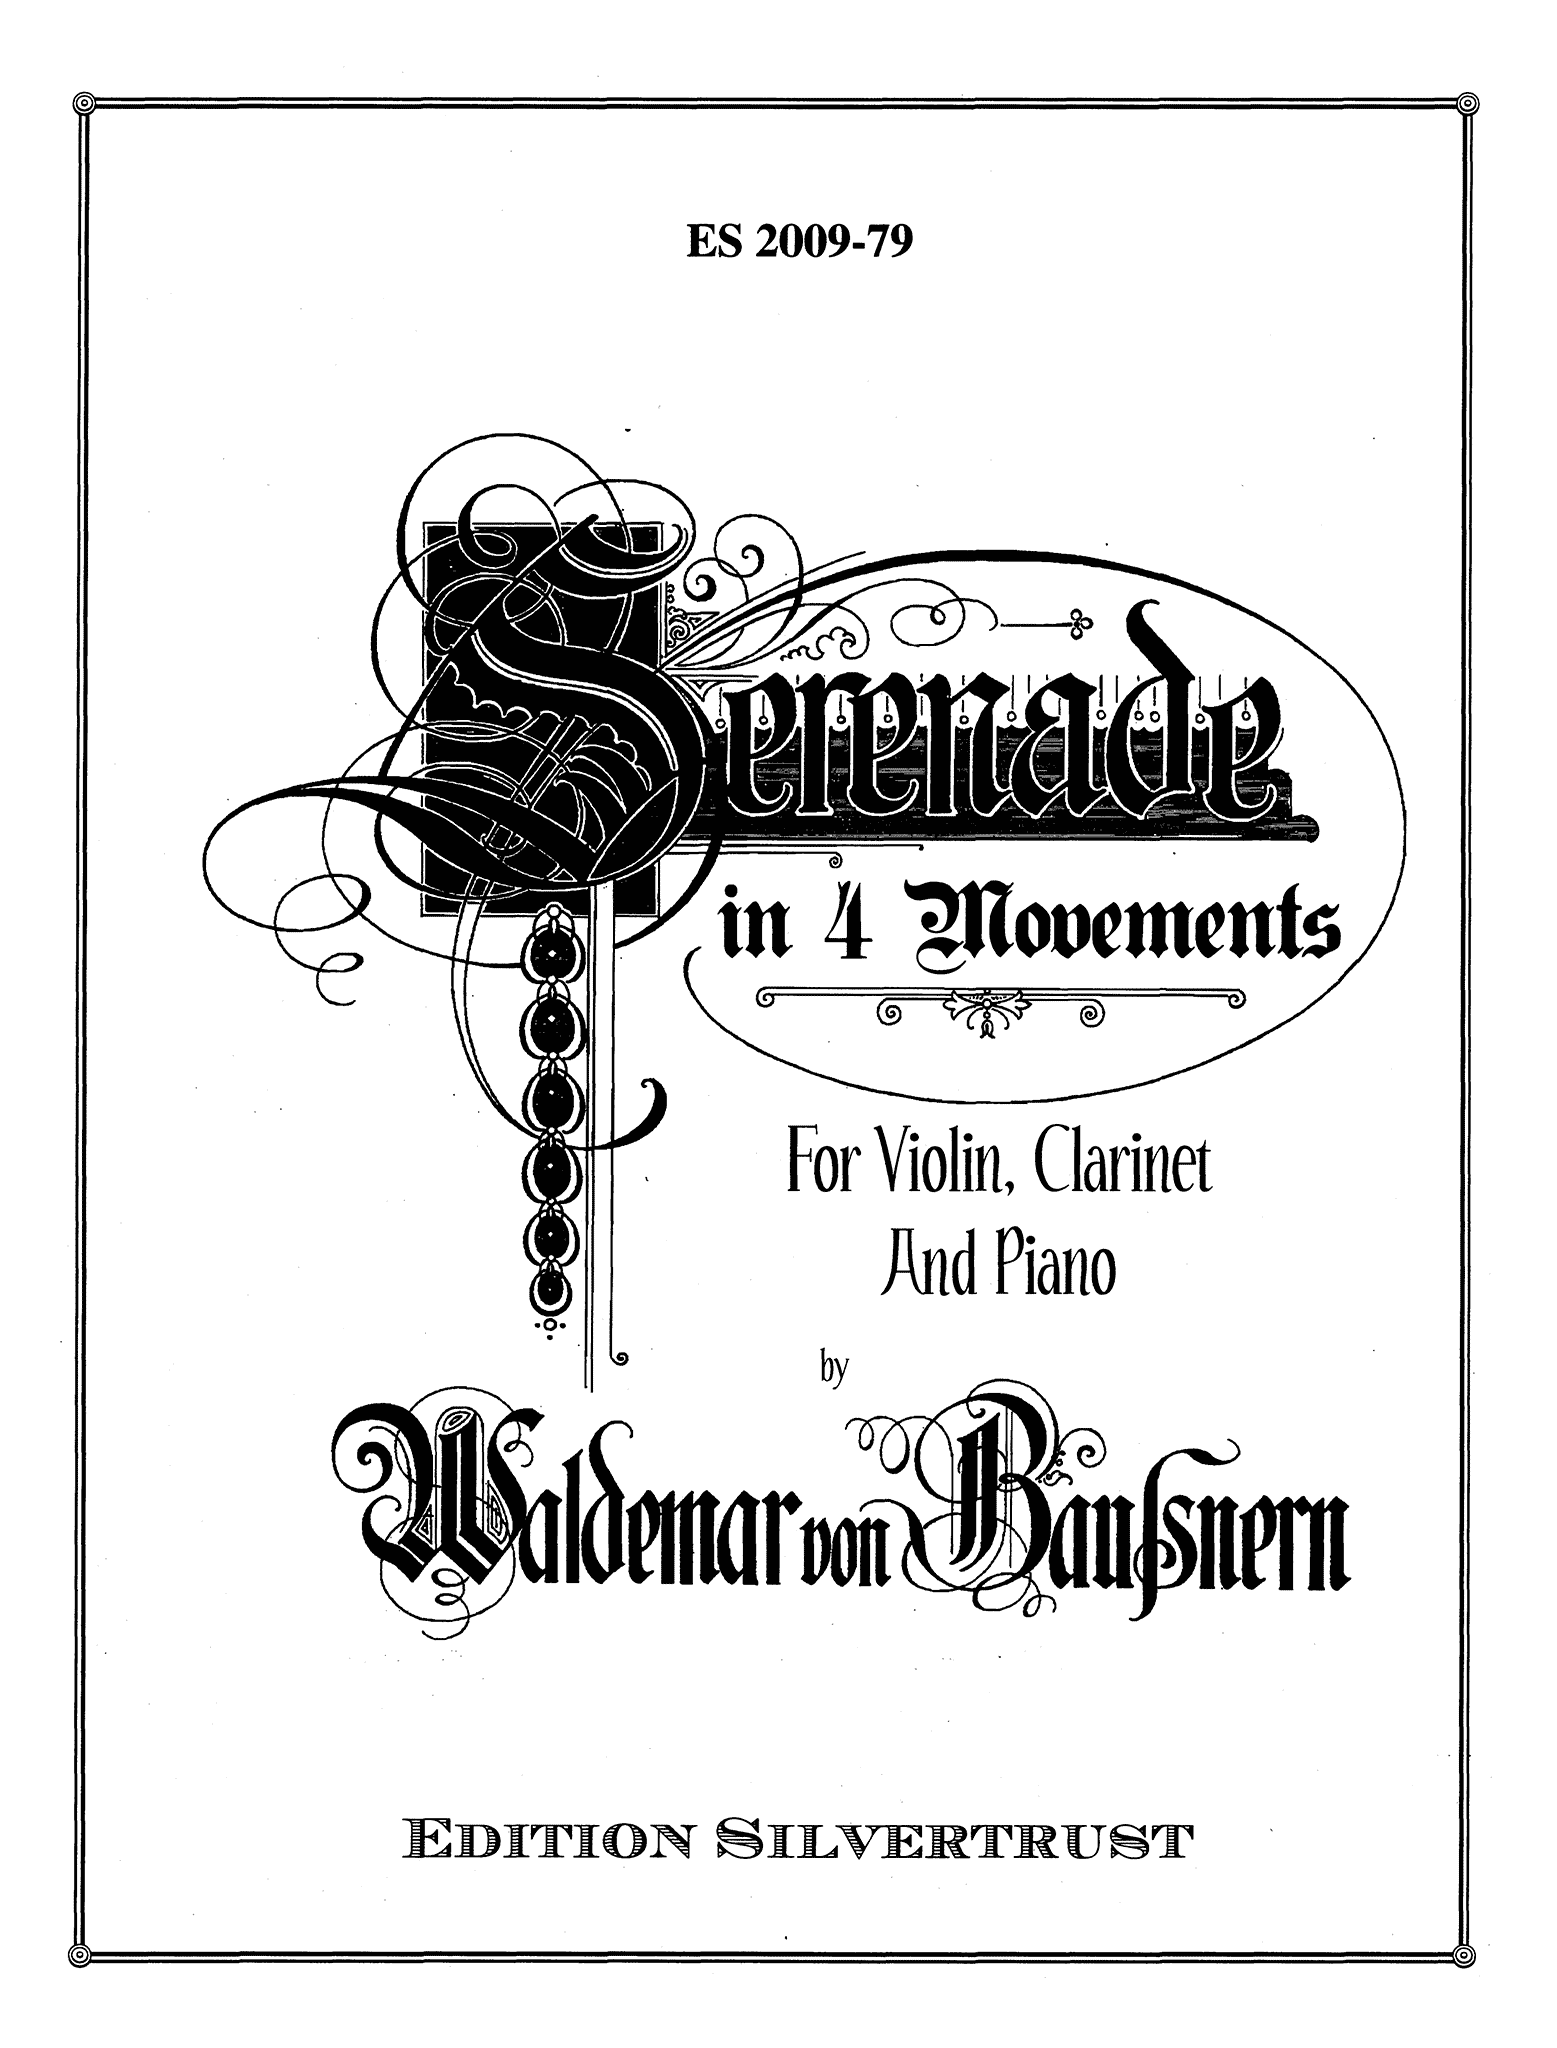 Baussnern Serenade in 4 Movements clarinet violin piano trio cover